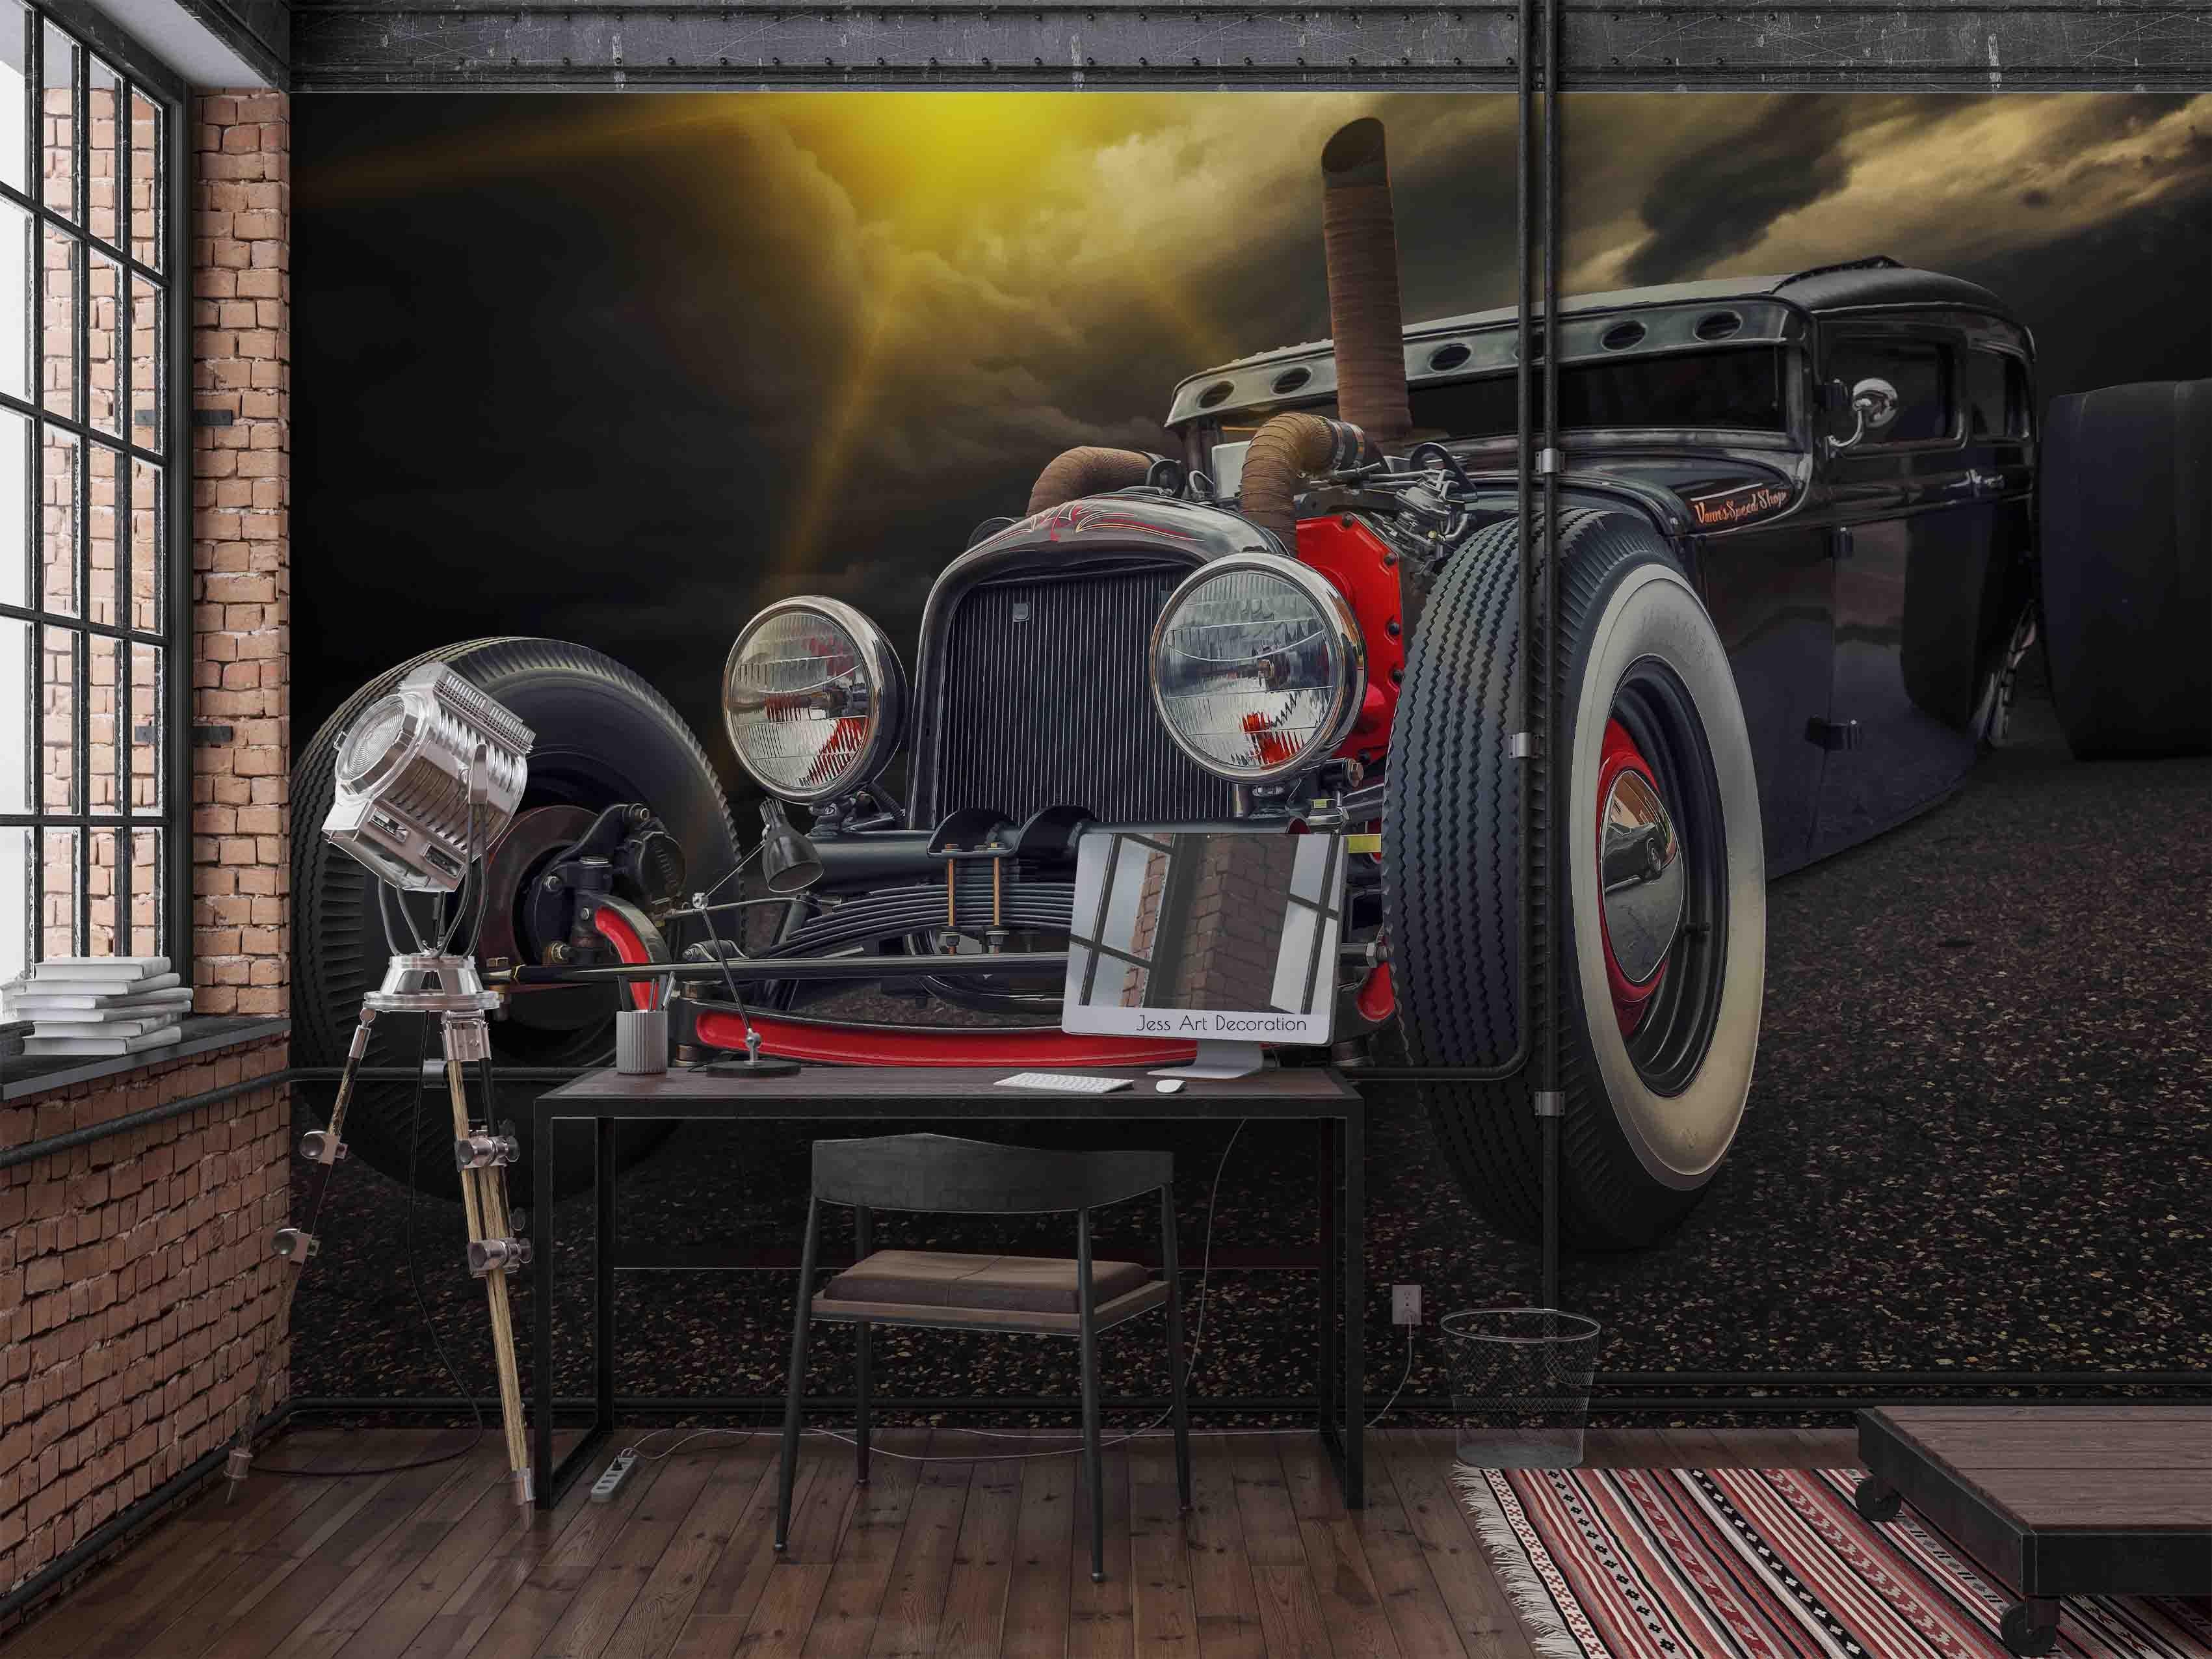 3D Vintage American Classic Car Show Wall Mural Wallpaper GD 3227- Jess Art Decoration